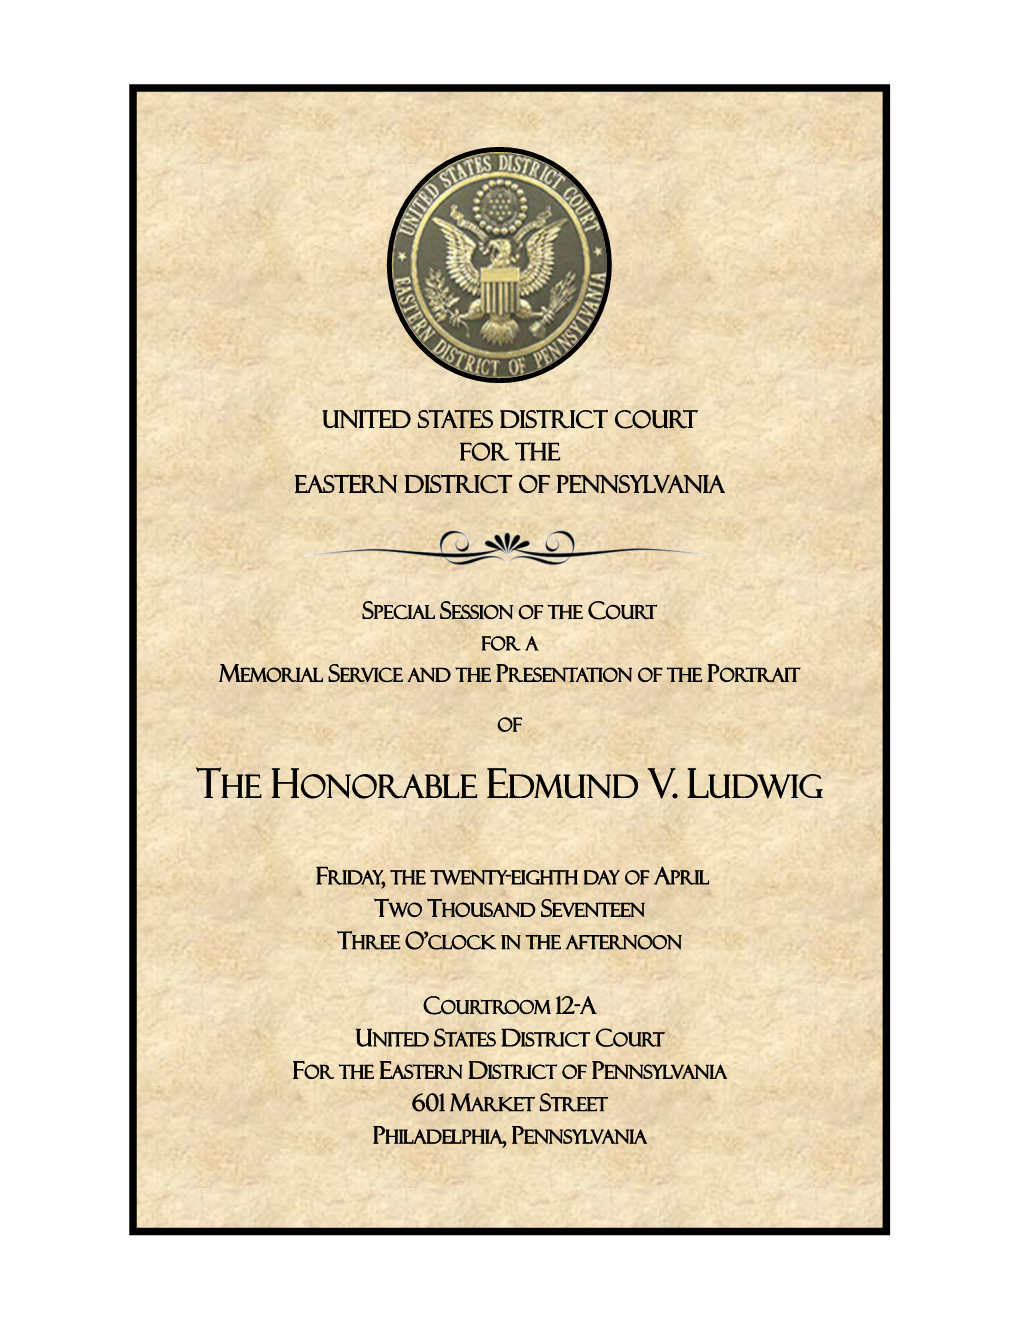 The Honorable Edmund V. Ludwig